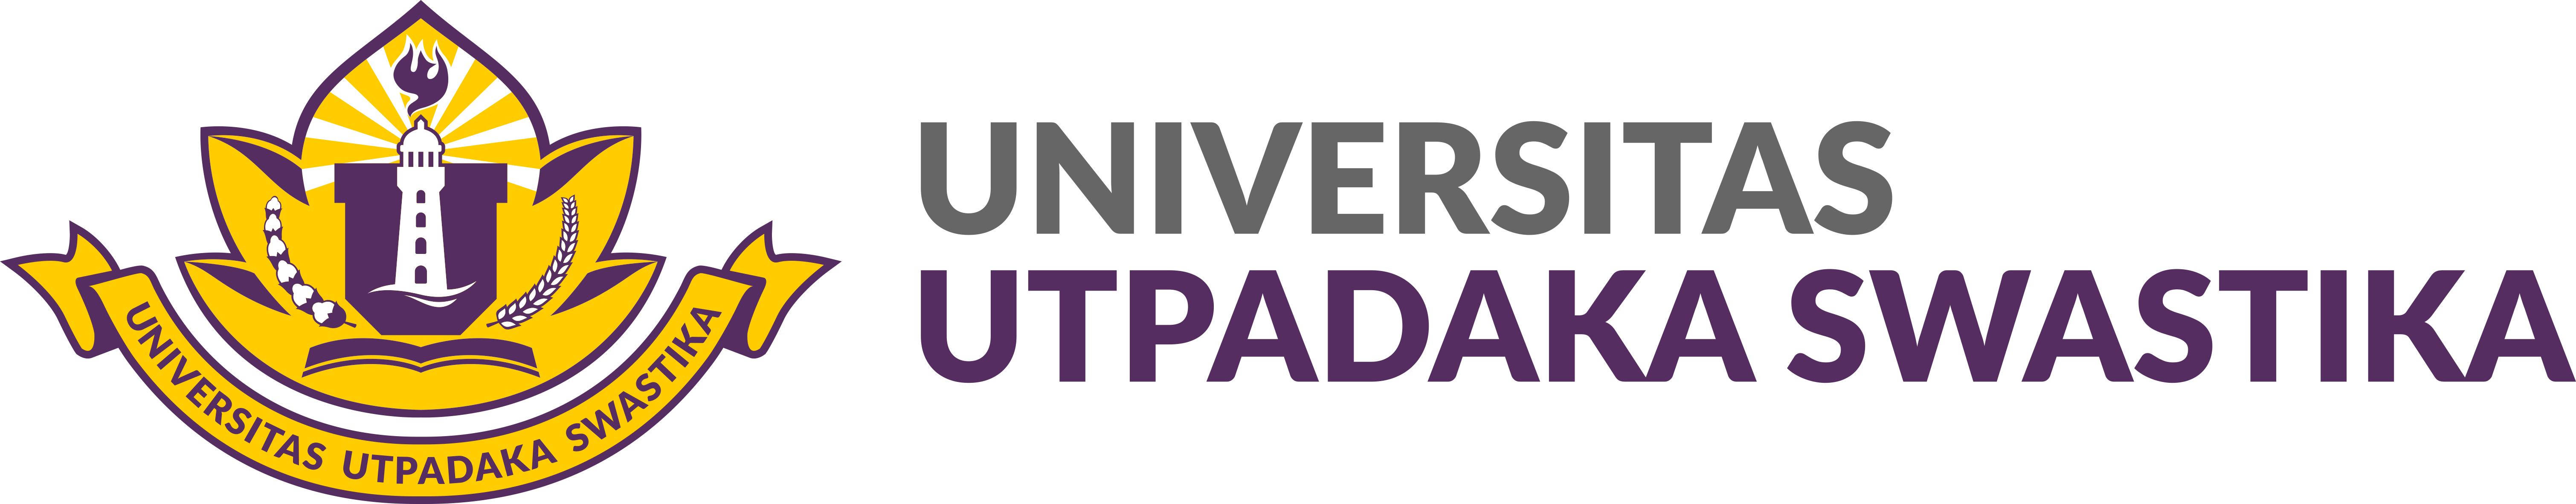 Logo UTPAS